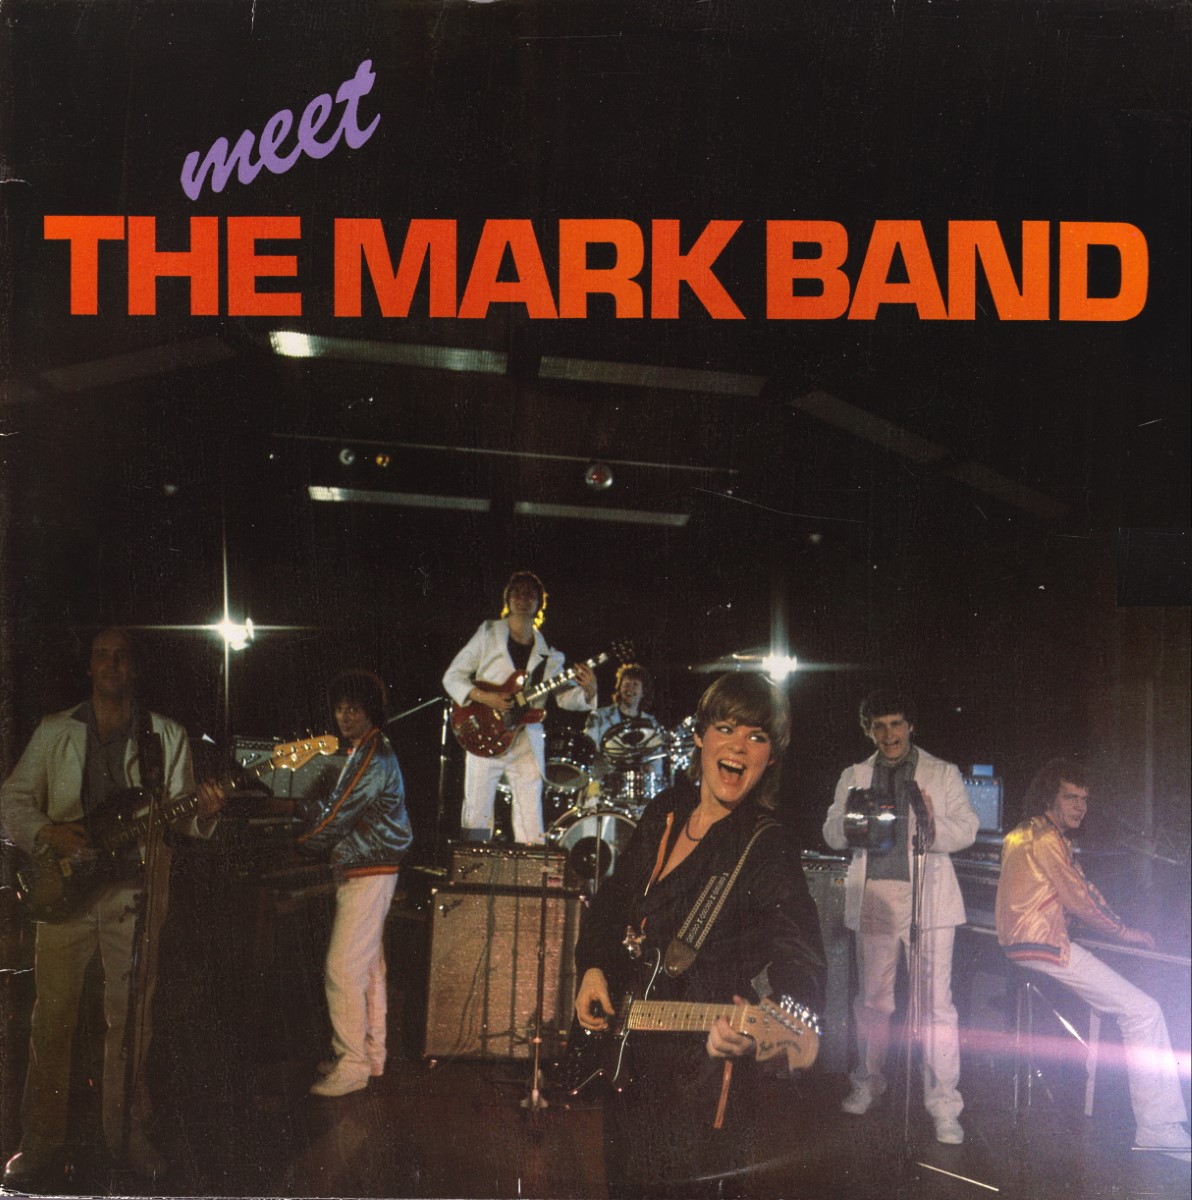 The Mark Band - Meet The Mark Band (1981)